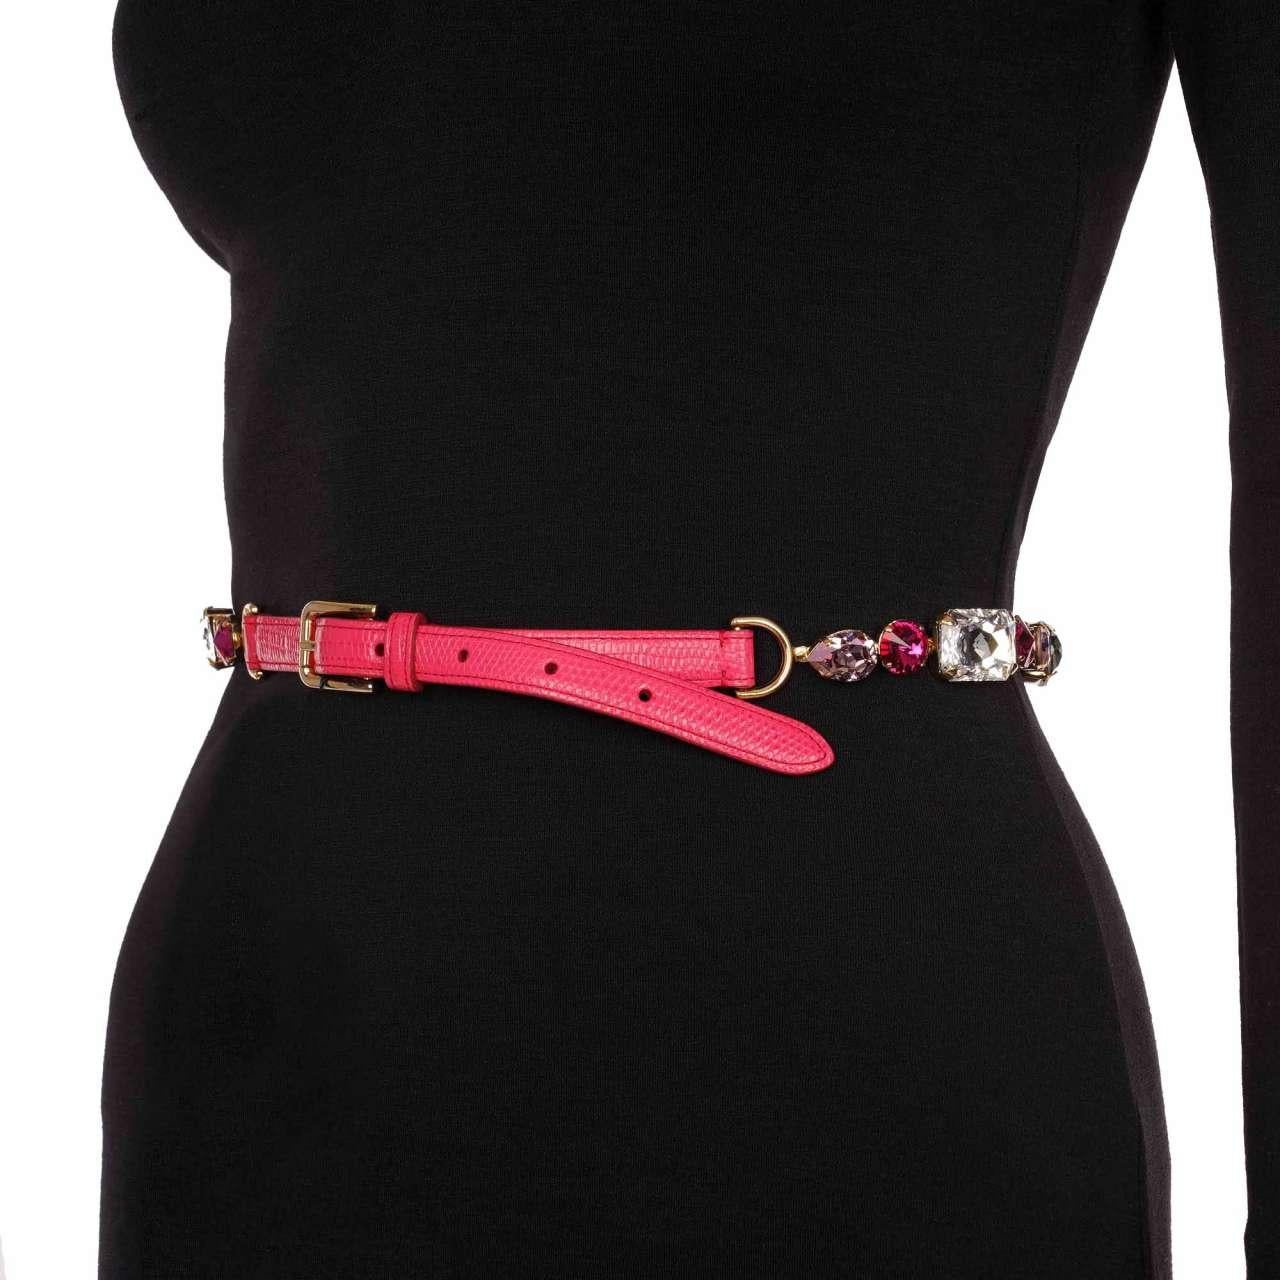 Dolce & Gabbana - Crystal Lizard Texture Chain Belt Pink Fuchsia Gold L In Excellent Condition For Sale In Erkrath, DE